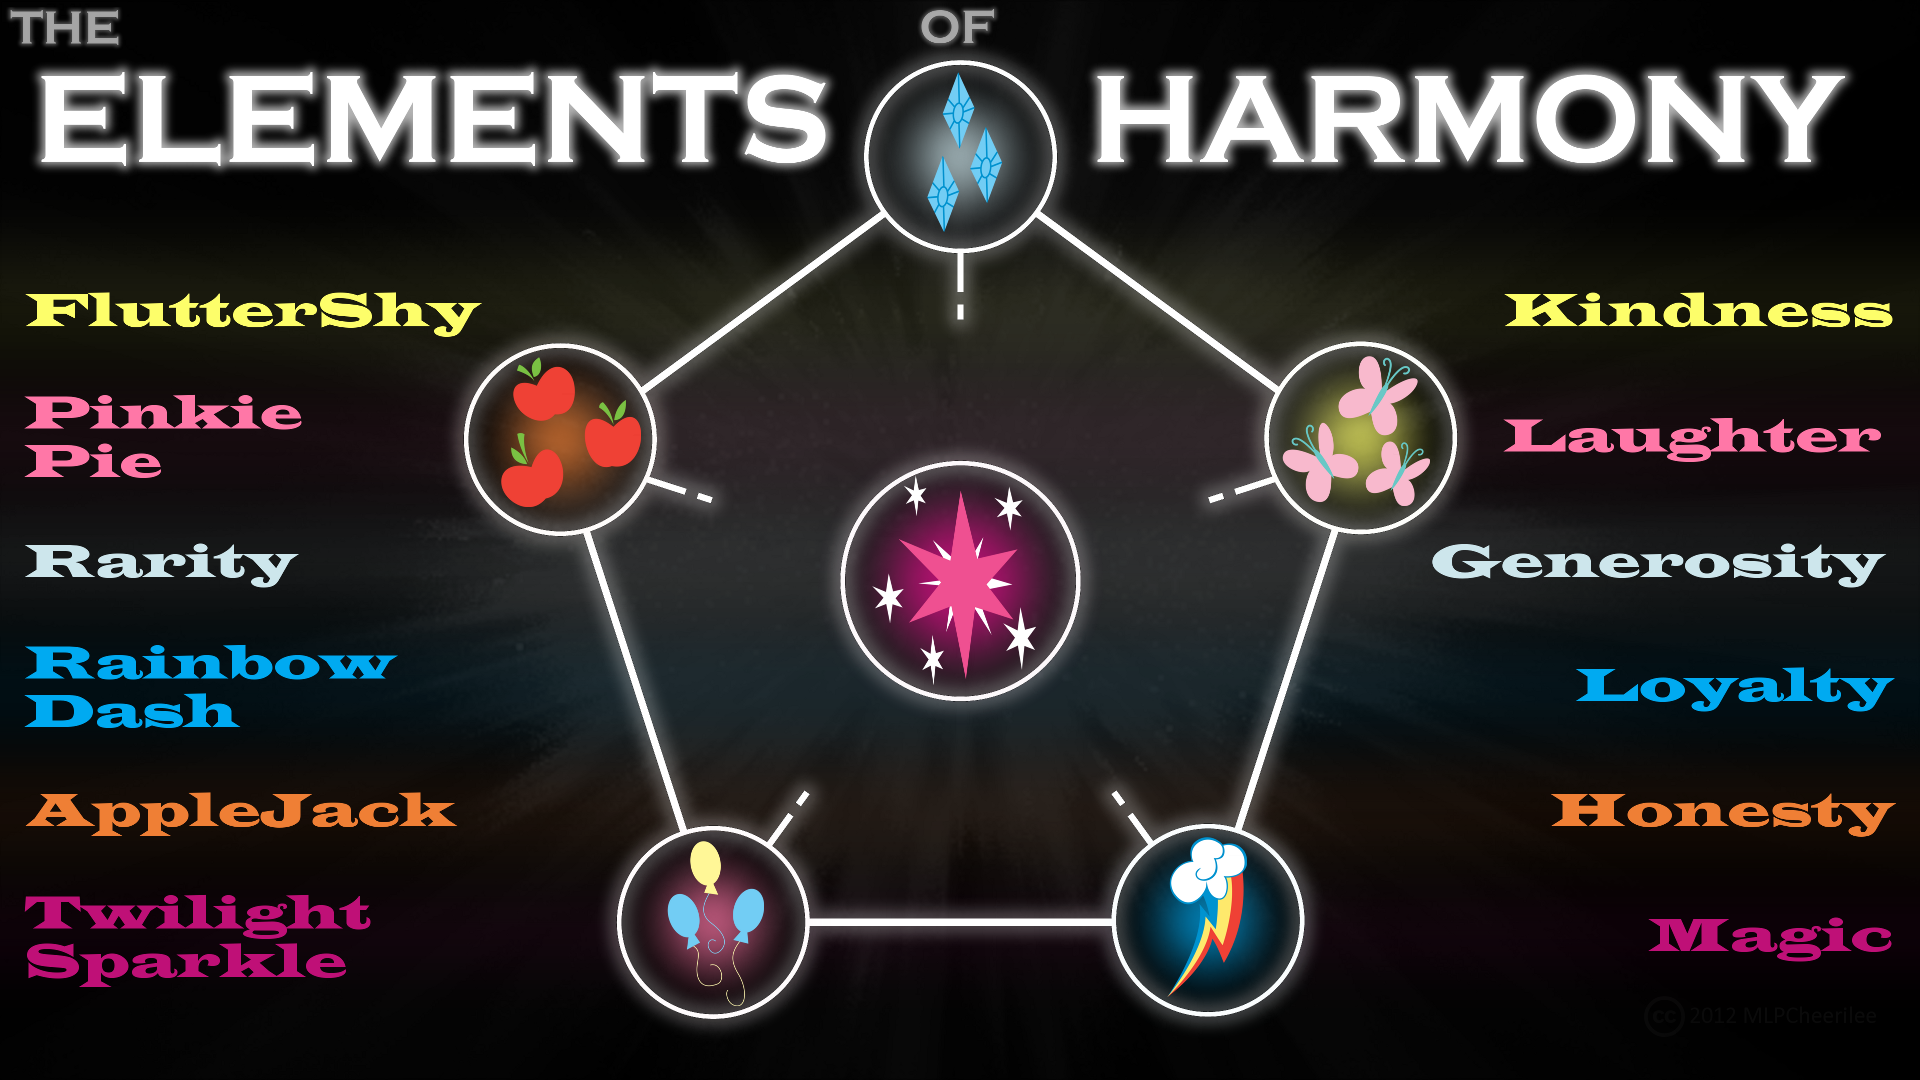 The Elements of Harmony